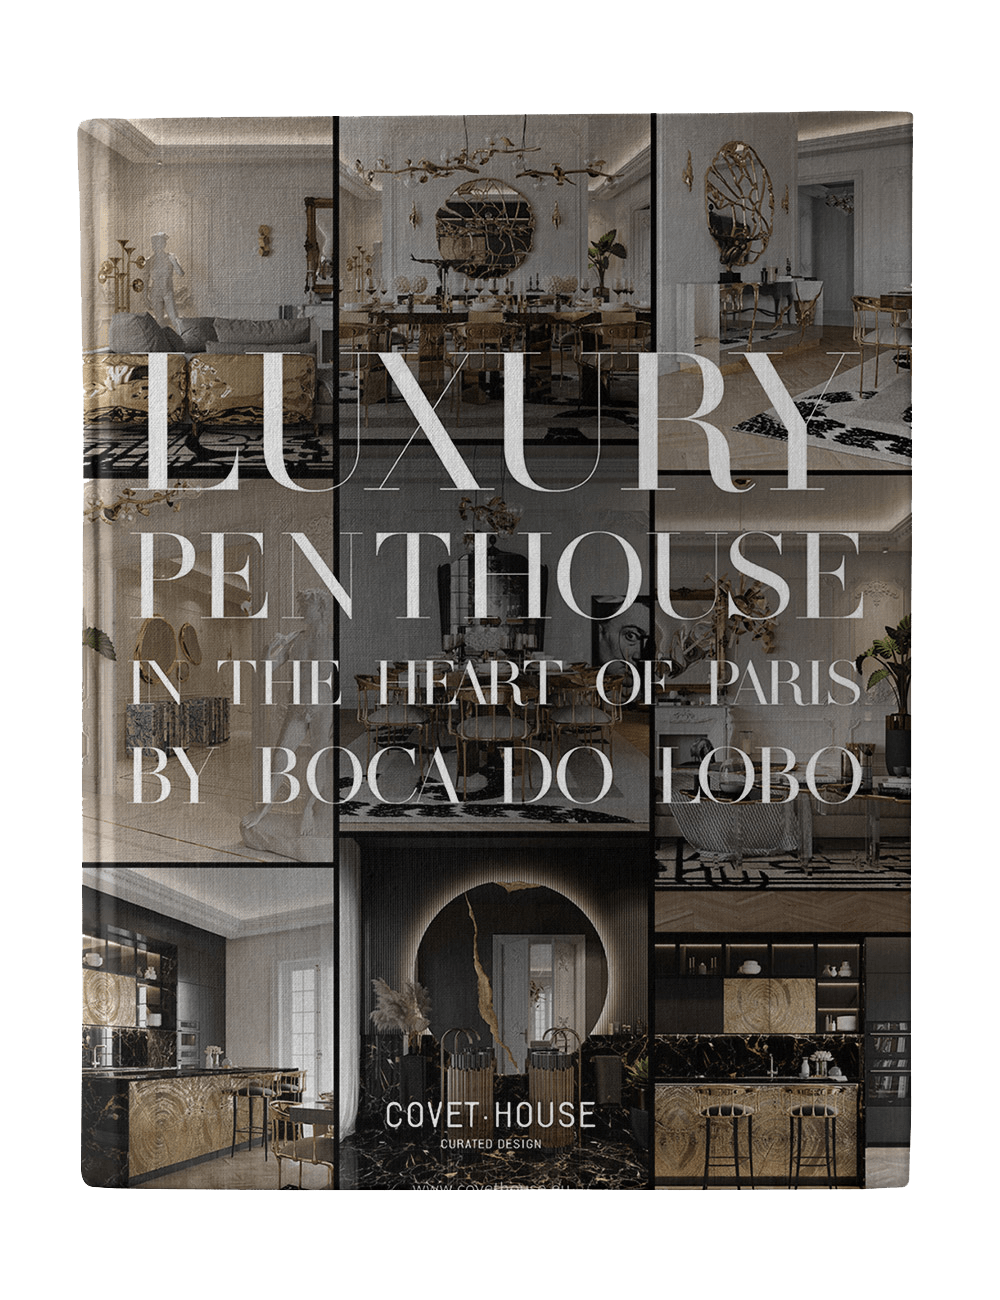 BOCA DO LOBO'S DELUXE PENTHOUSE
IN THE HEART OF PARIS